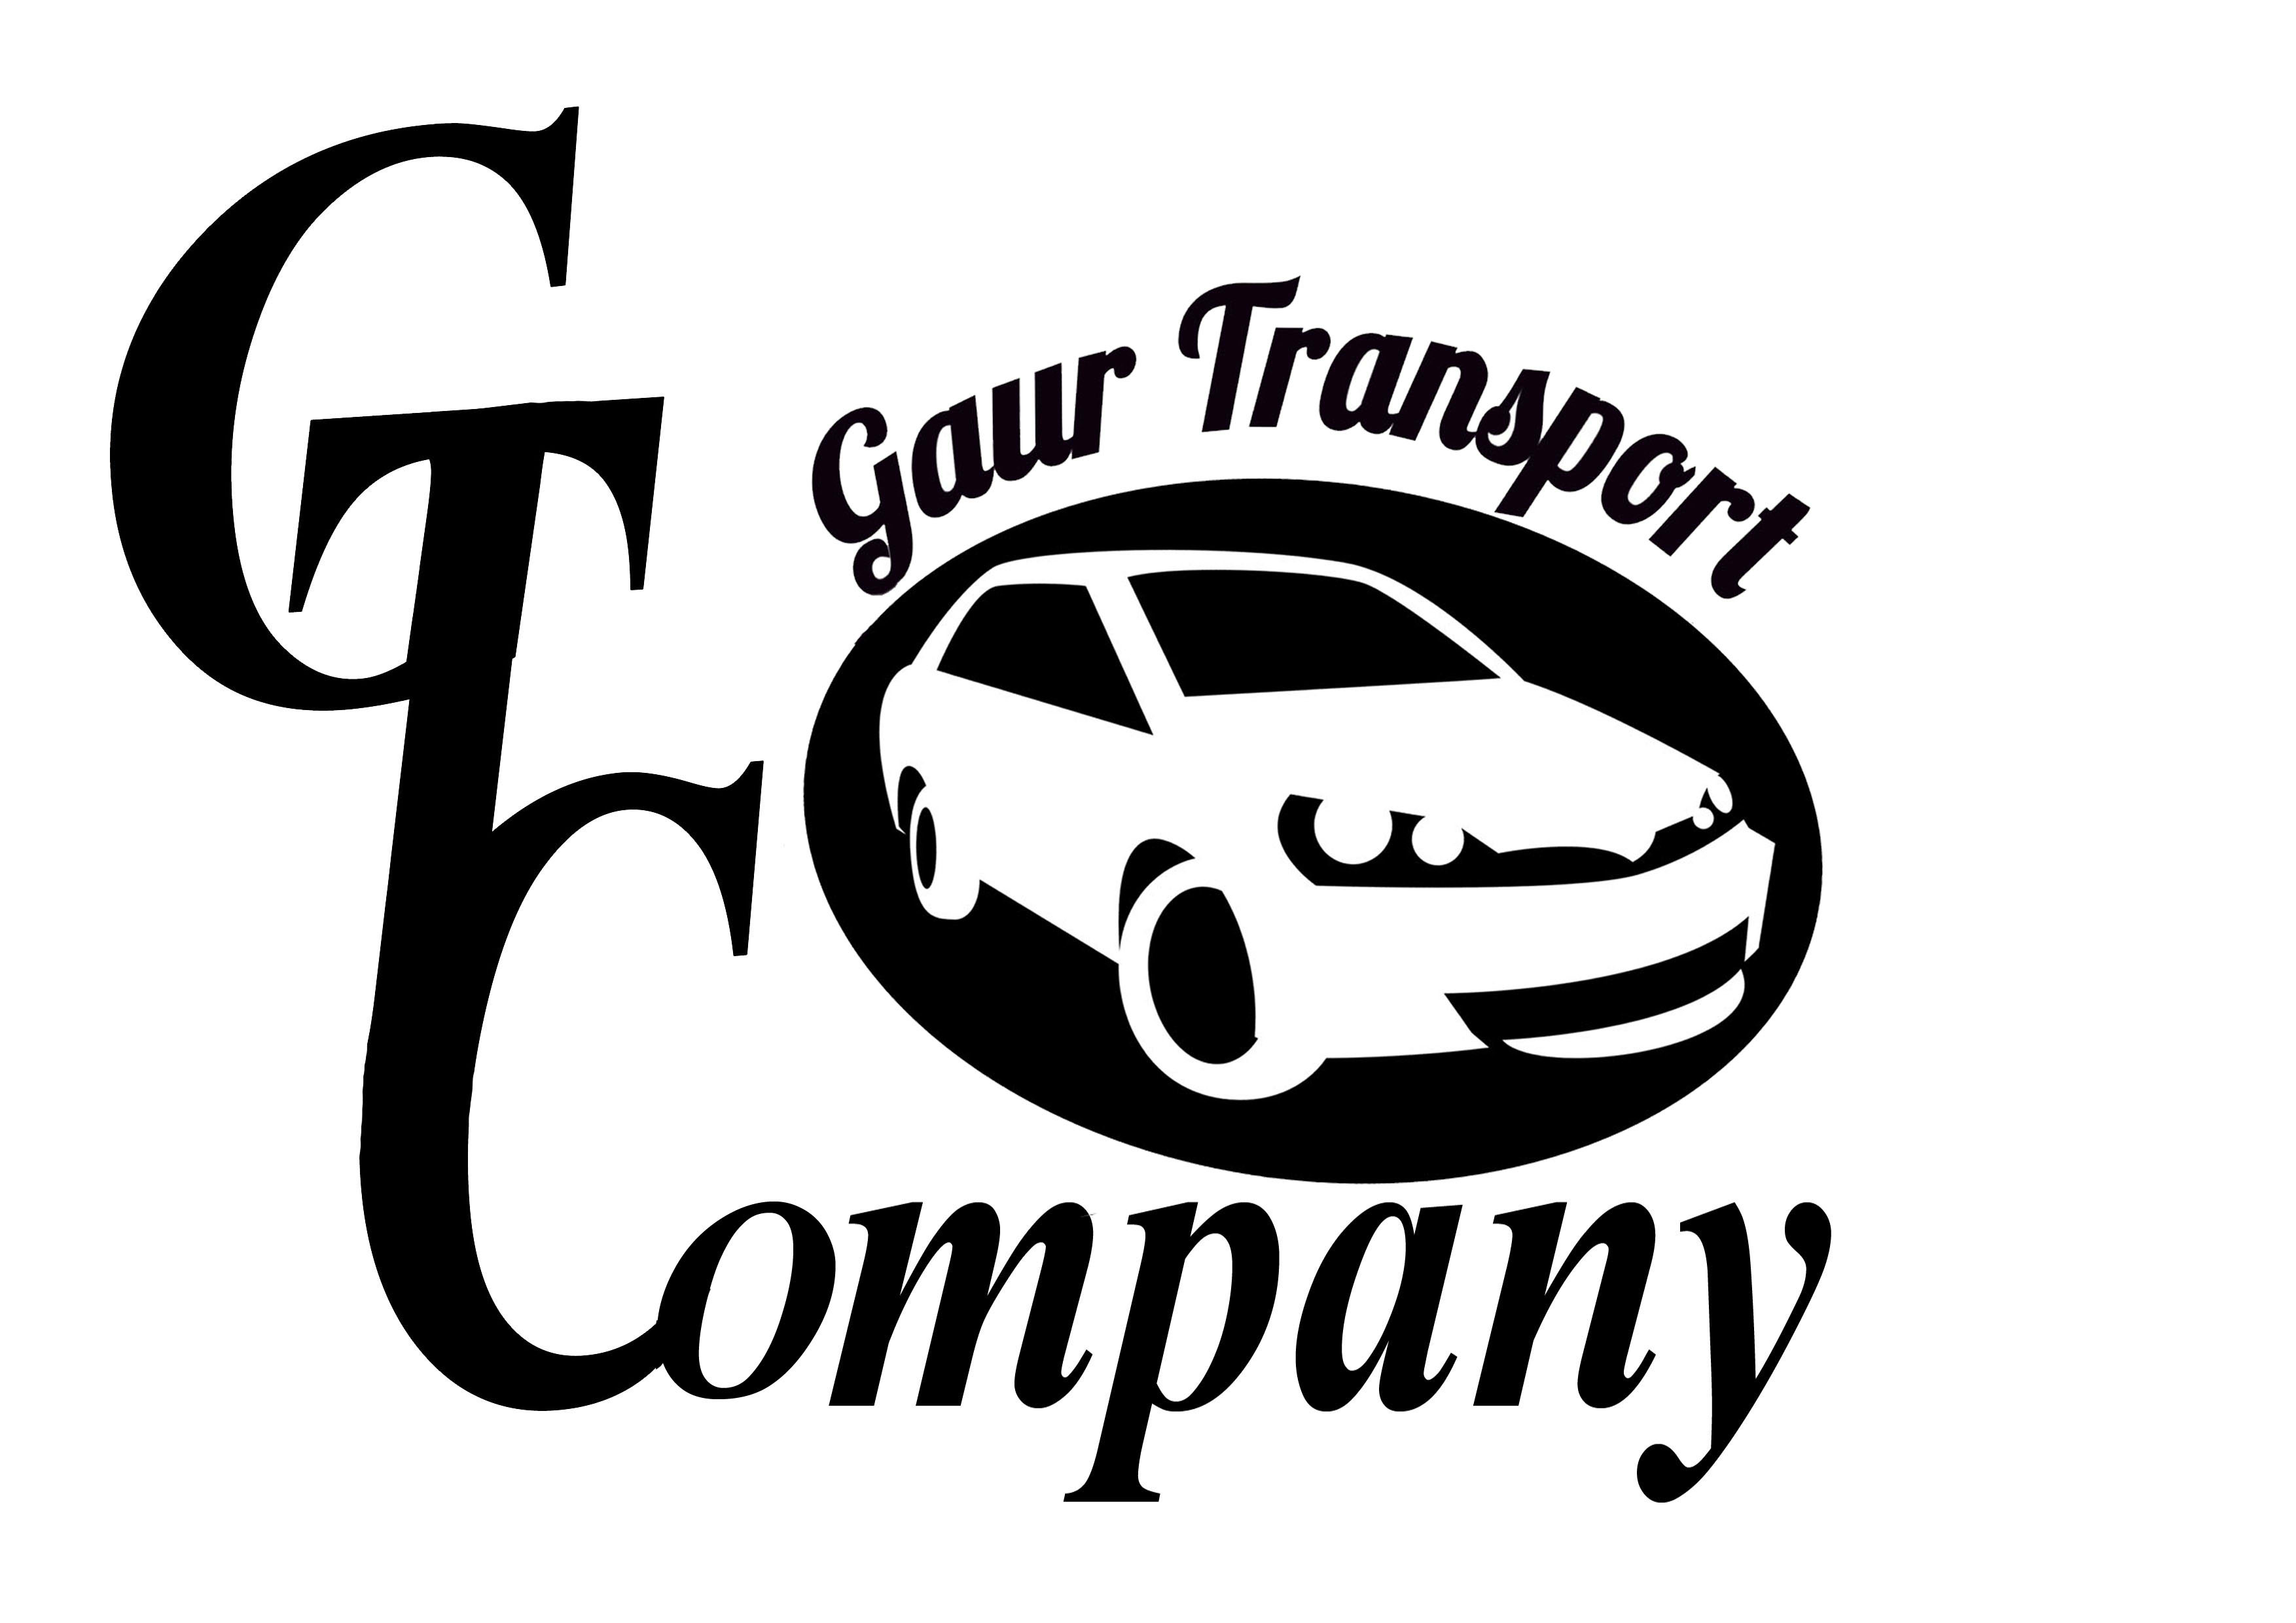 Gaur Transport Company